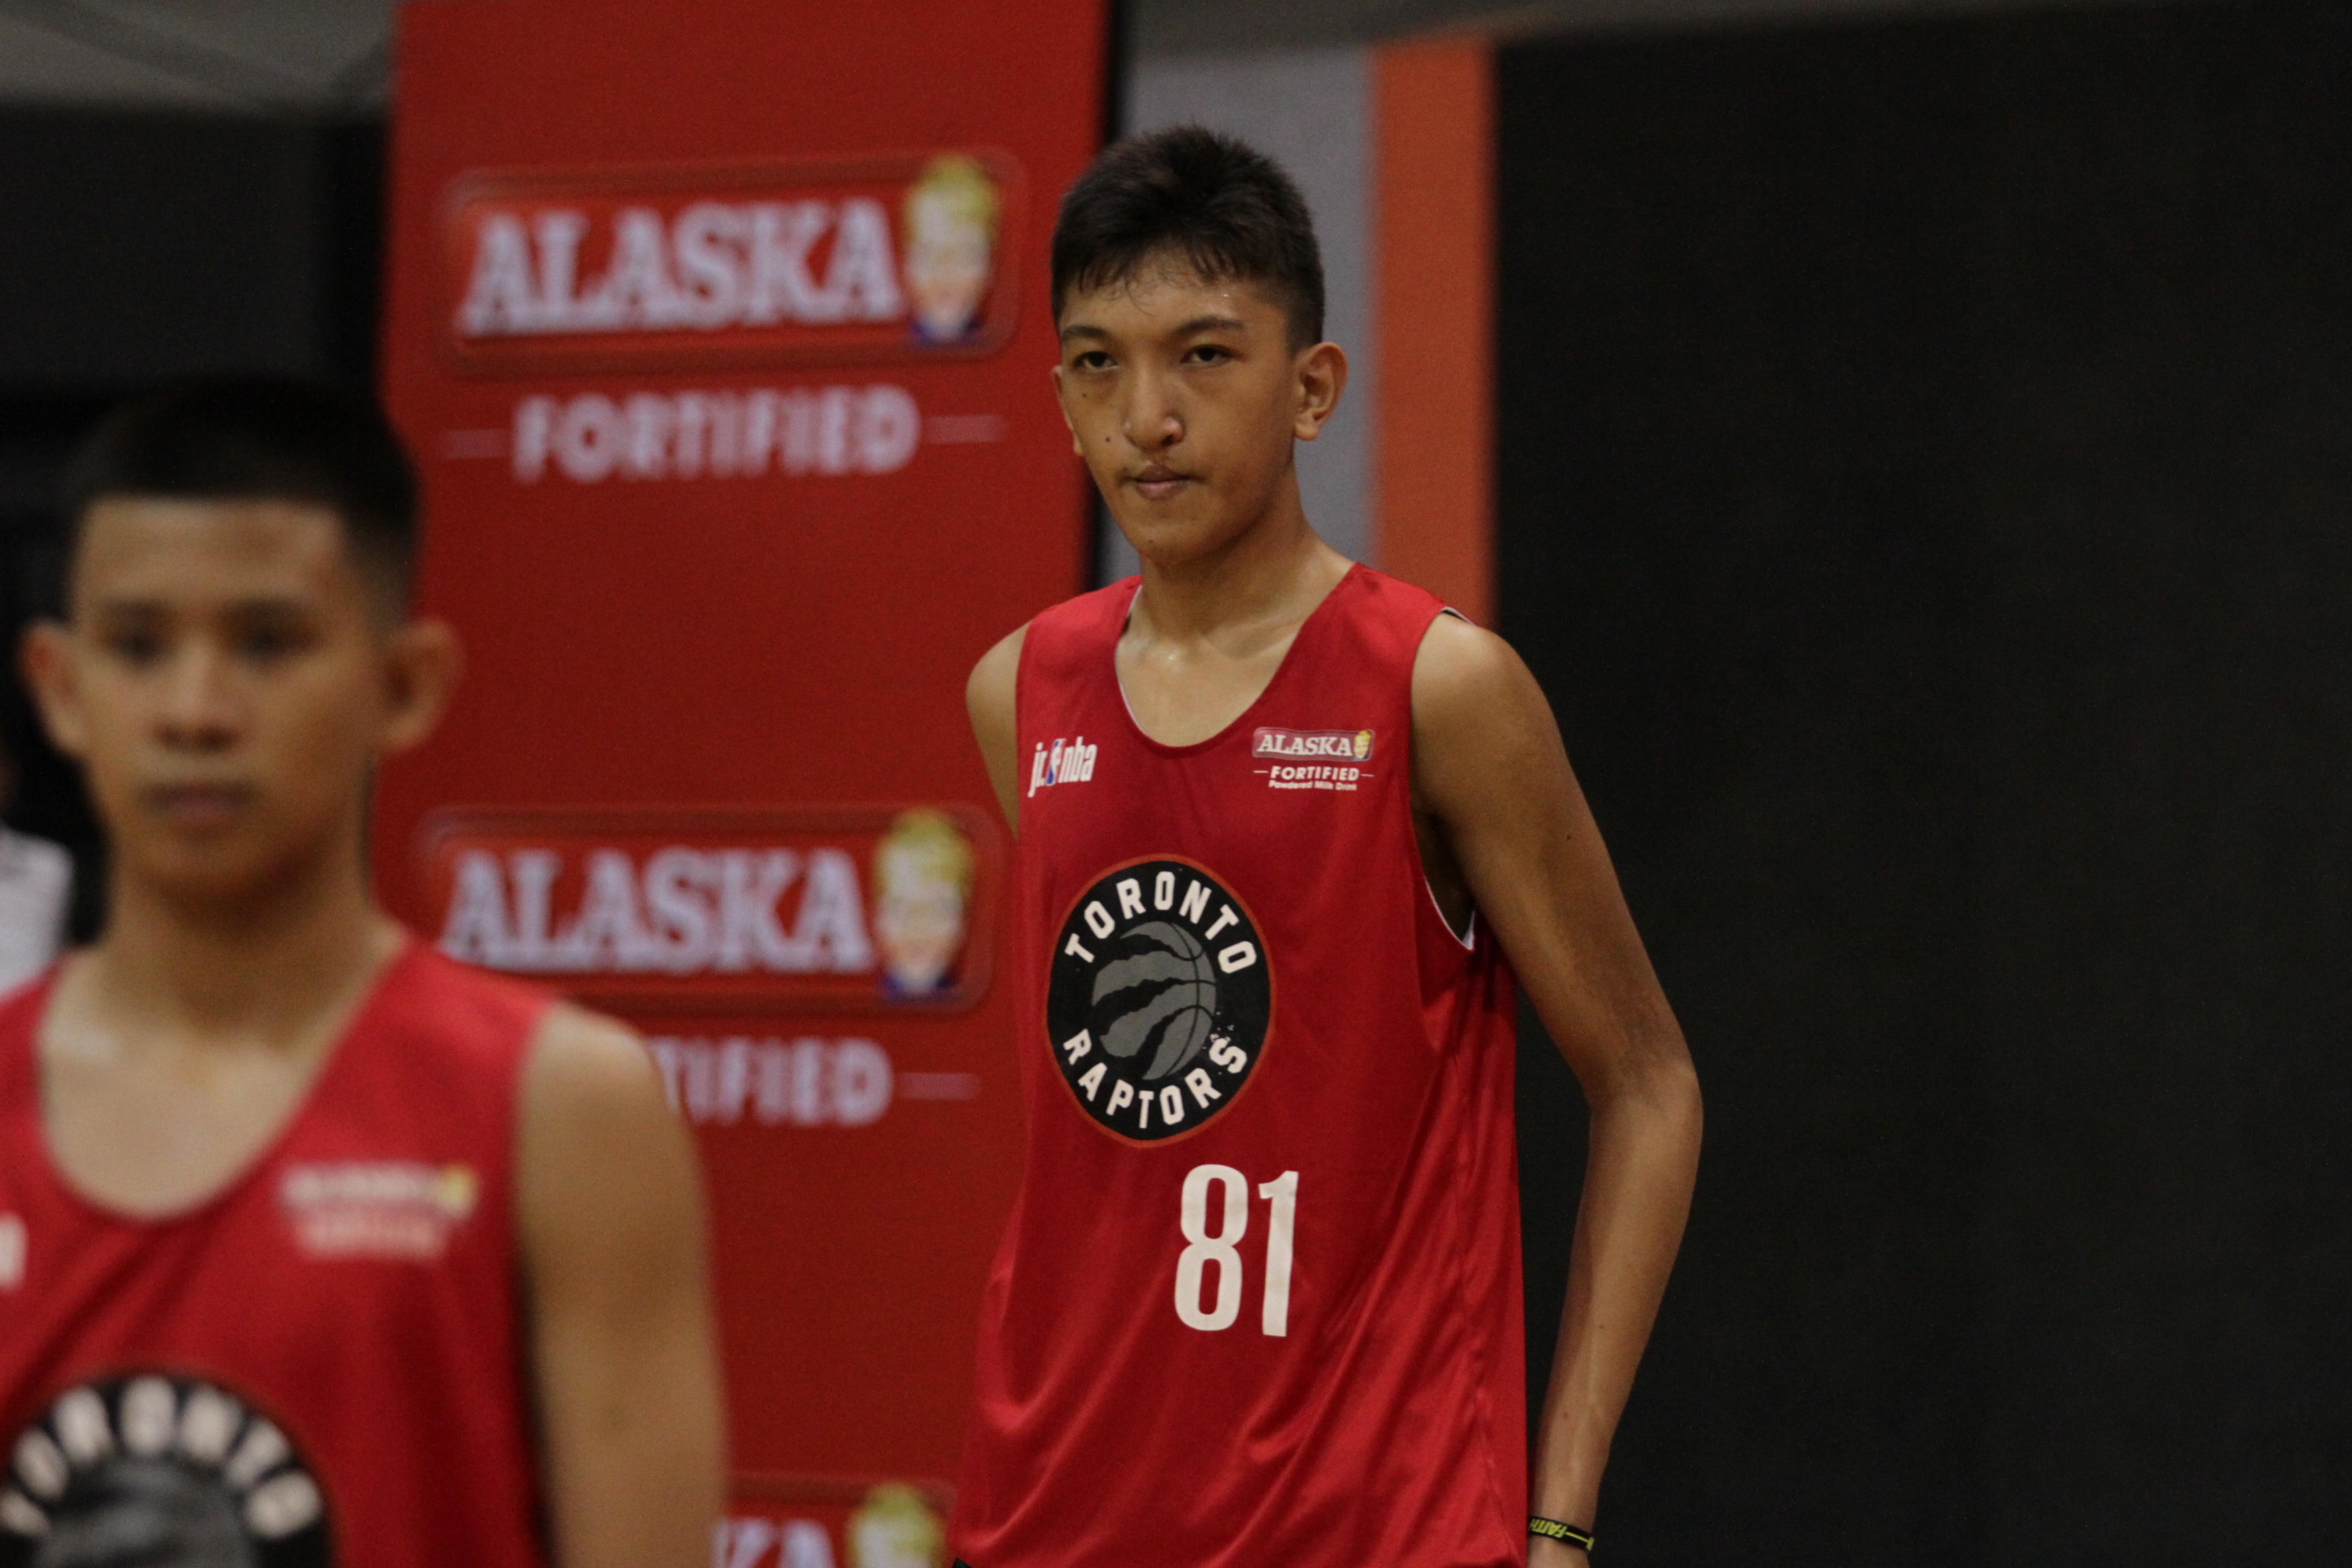 Gentle giant Kobe Demisana, 3 other Filipinos make it to Jr. NBA global